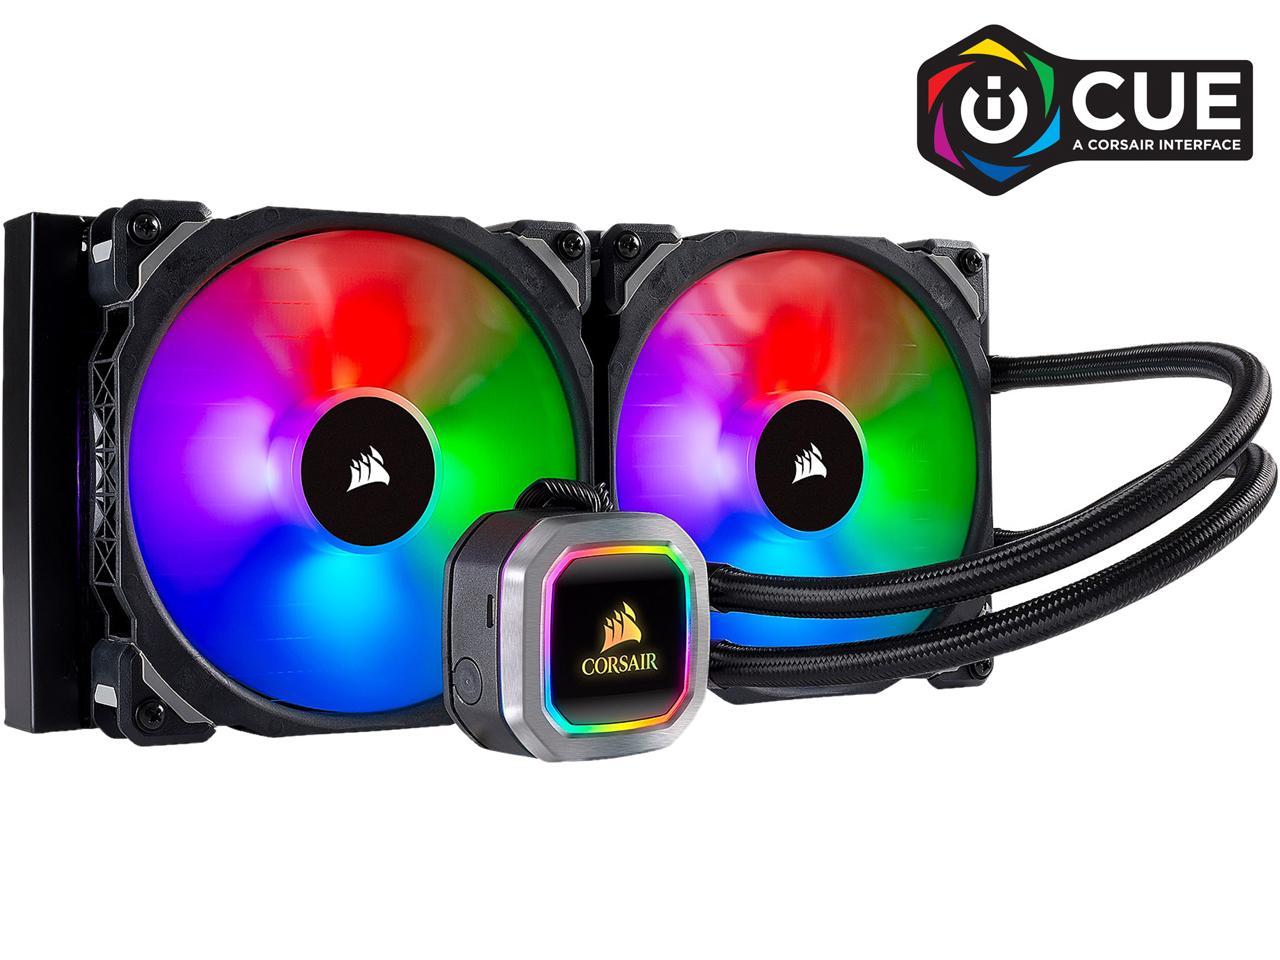 CORSAIR H115i RGB Platinum 280mm AIO Liquid CPU Cooler *RFB* @Newegg (AR) $70